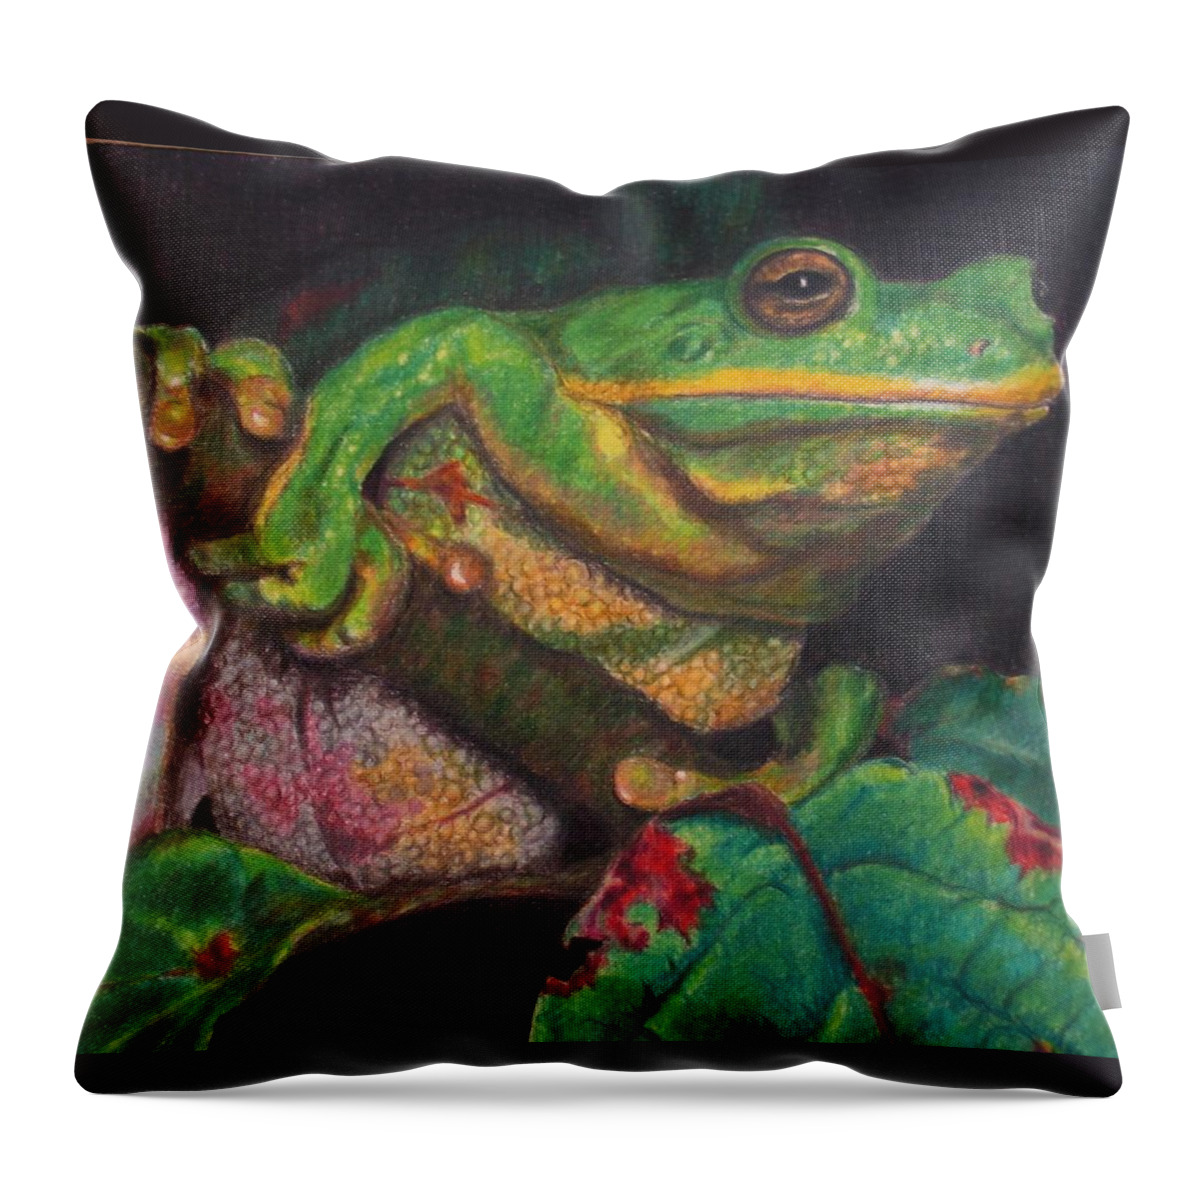 Frog Throw Pillow featuring the painting Froggie by Karen Ilari